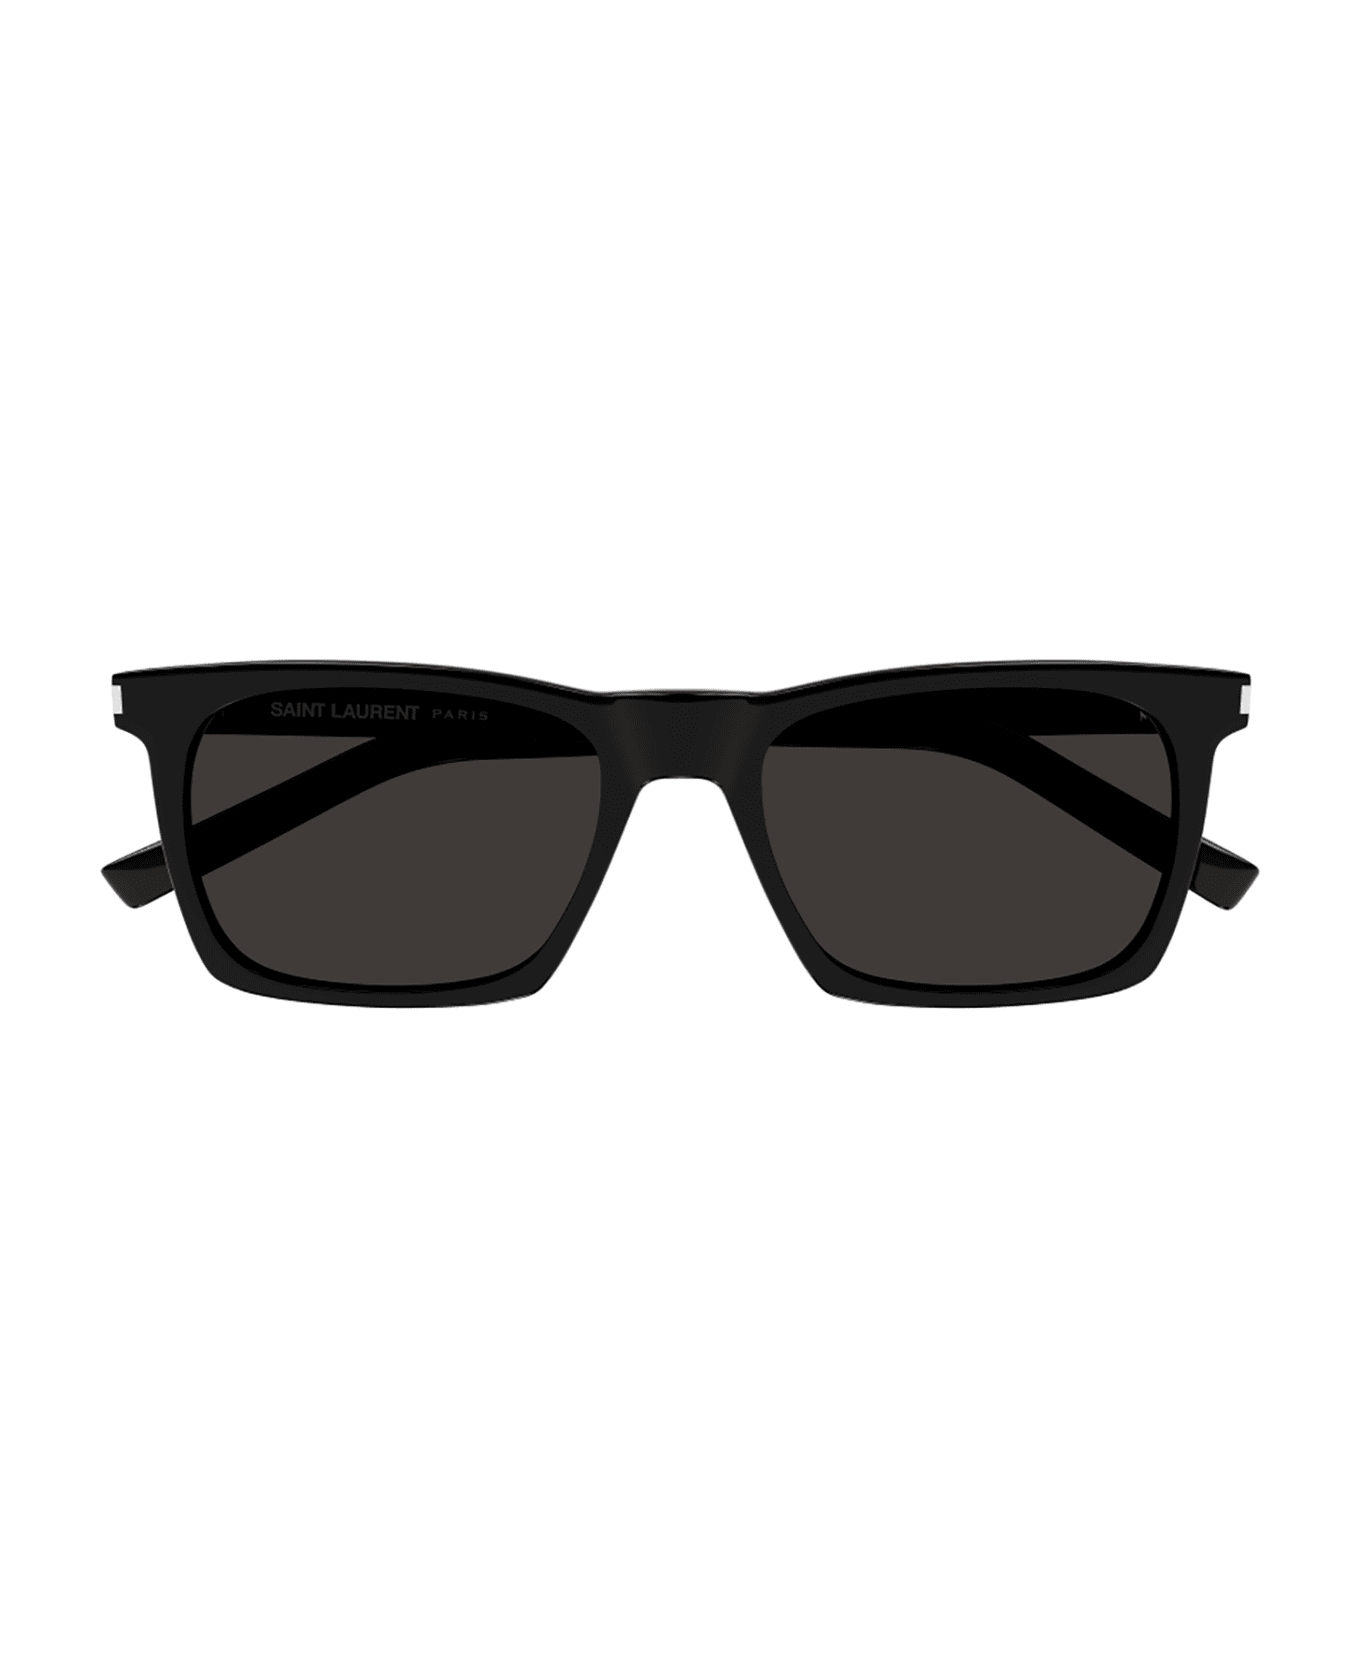 Saint Laurent Eyewear 1e4y4id0a - Garrett Leight Doc Sunglasses